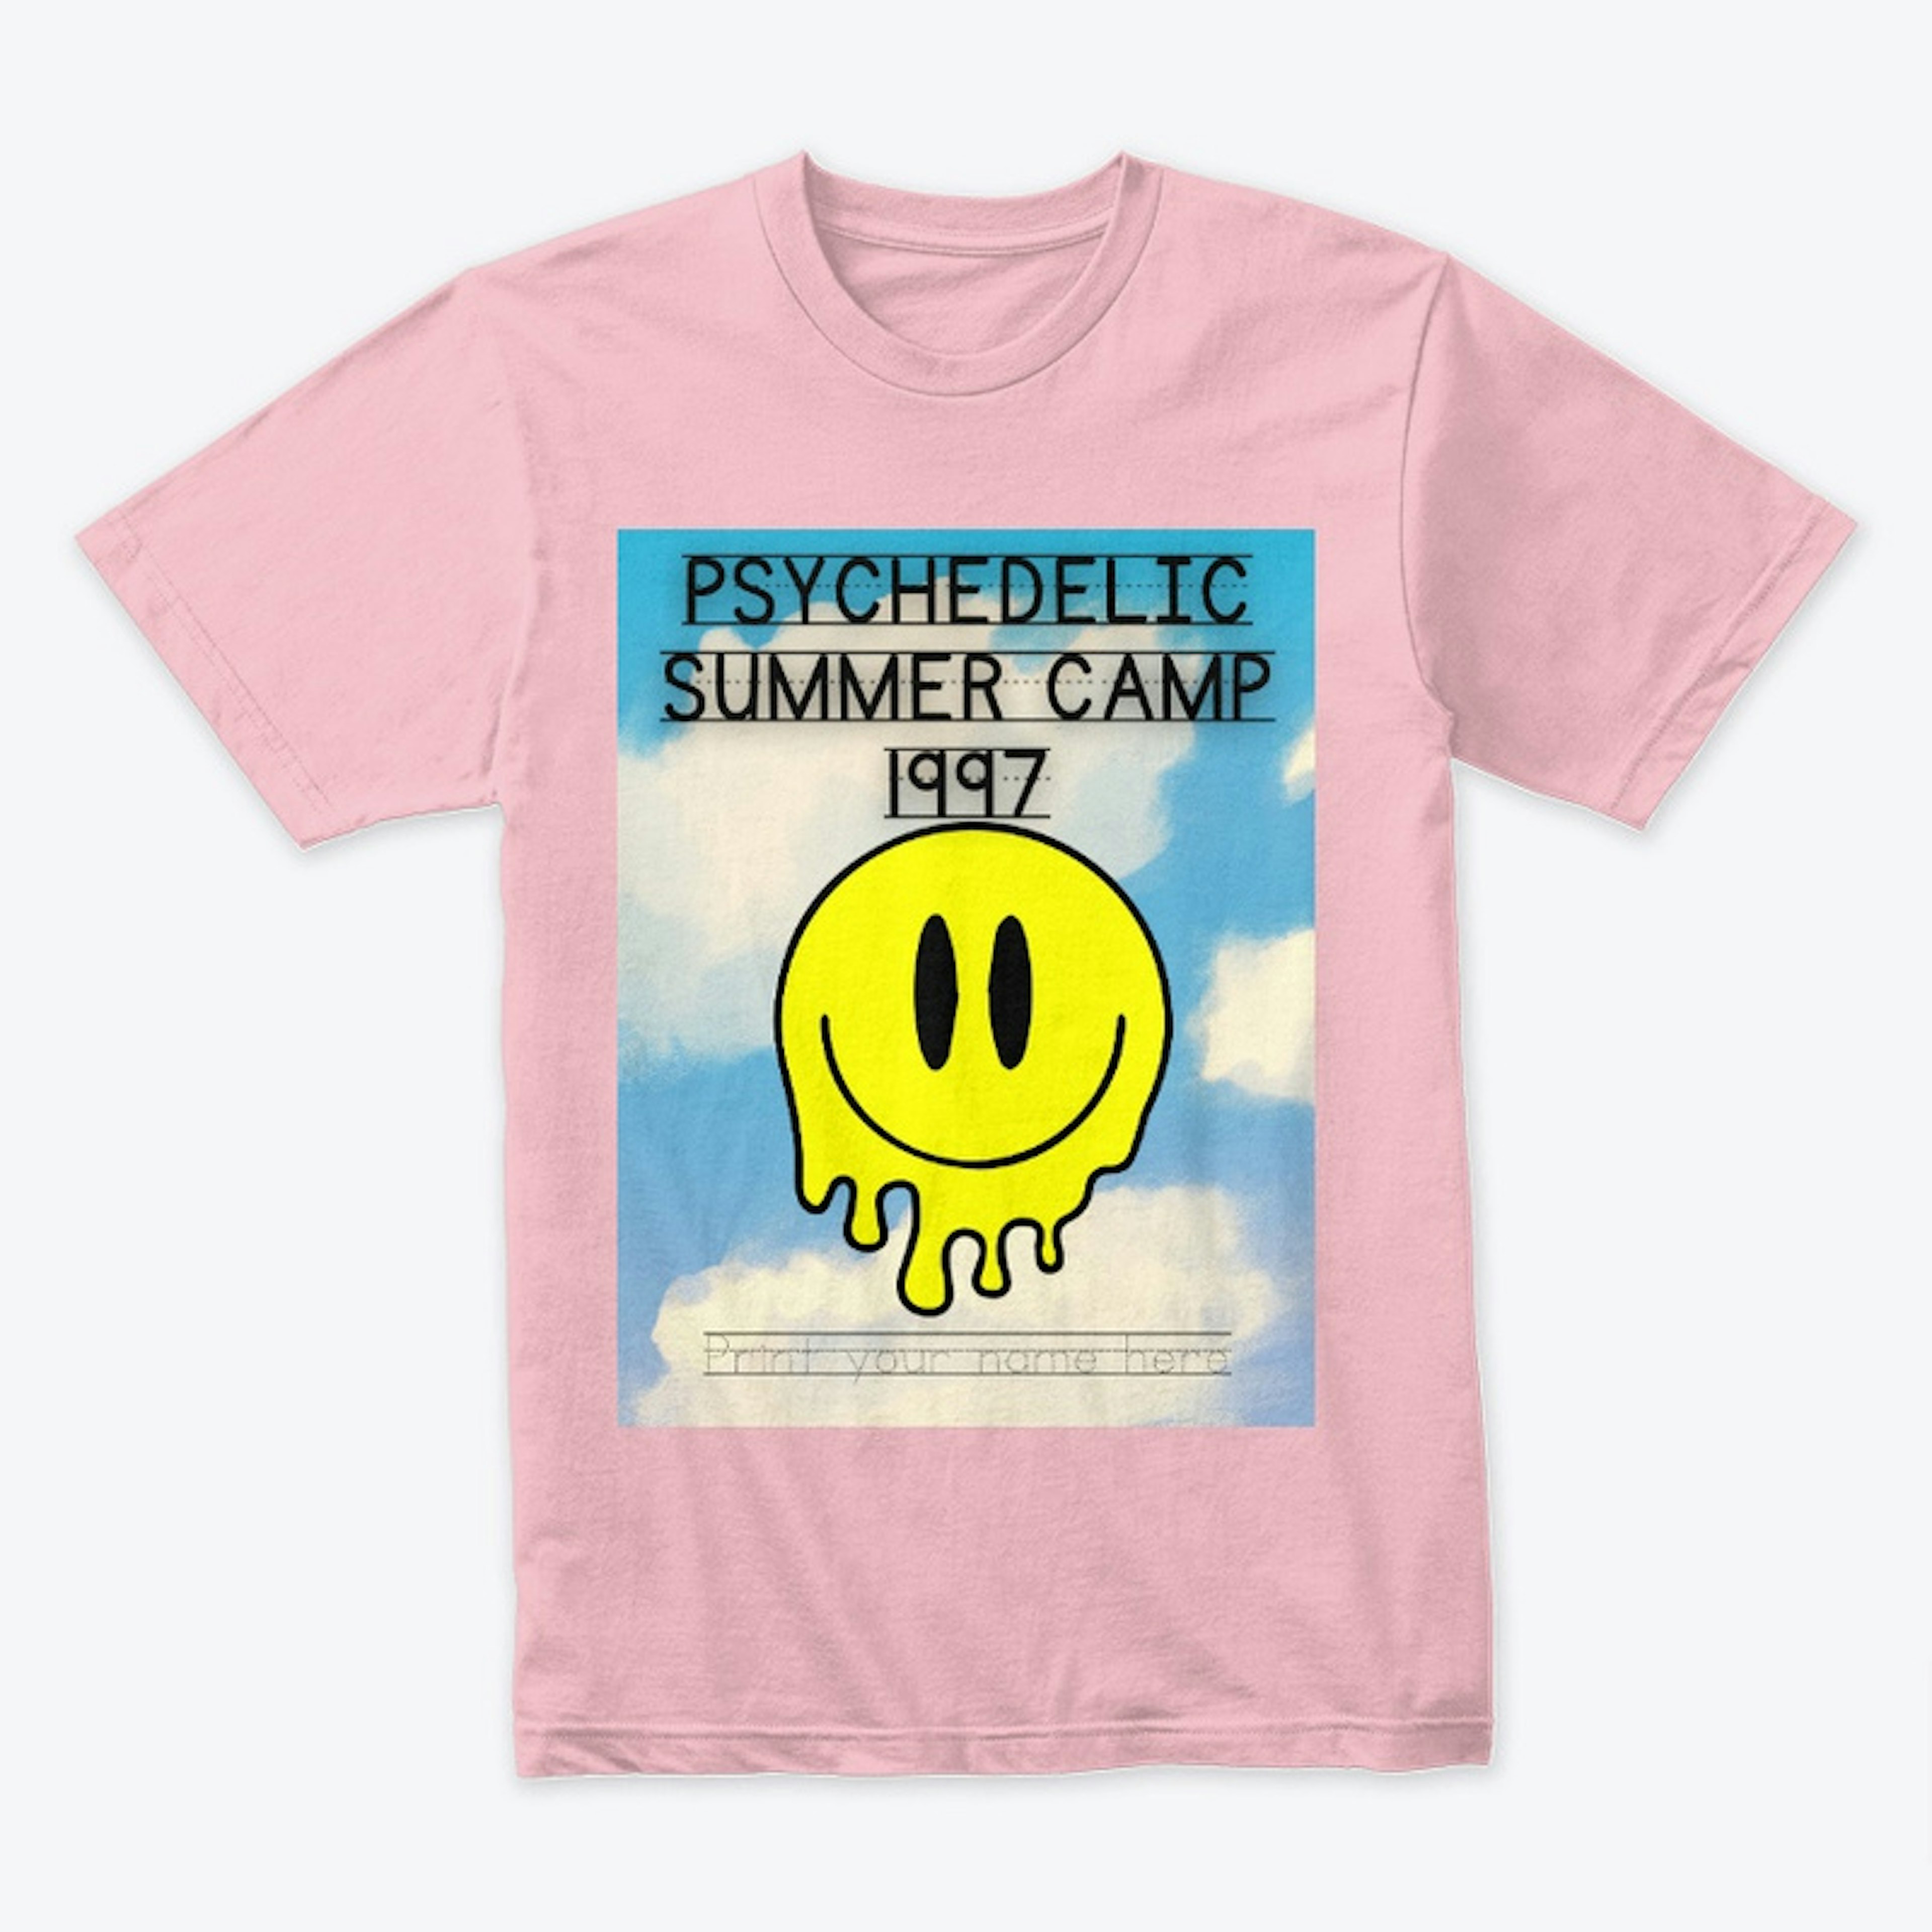 Summer Camp '97